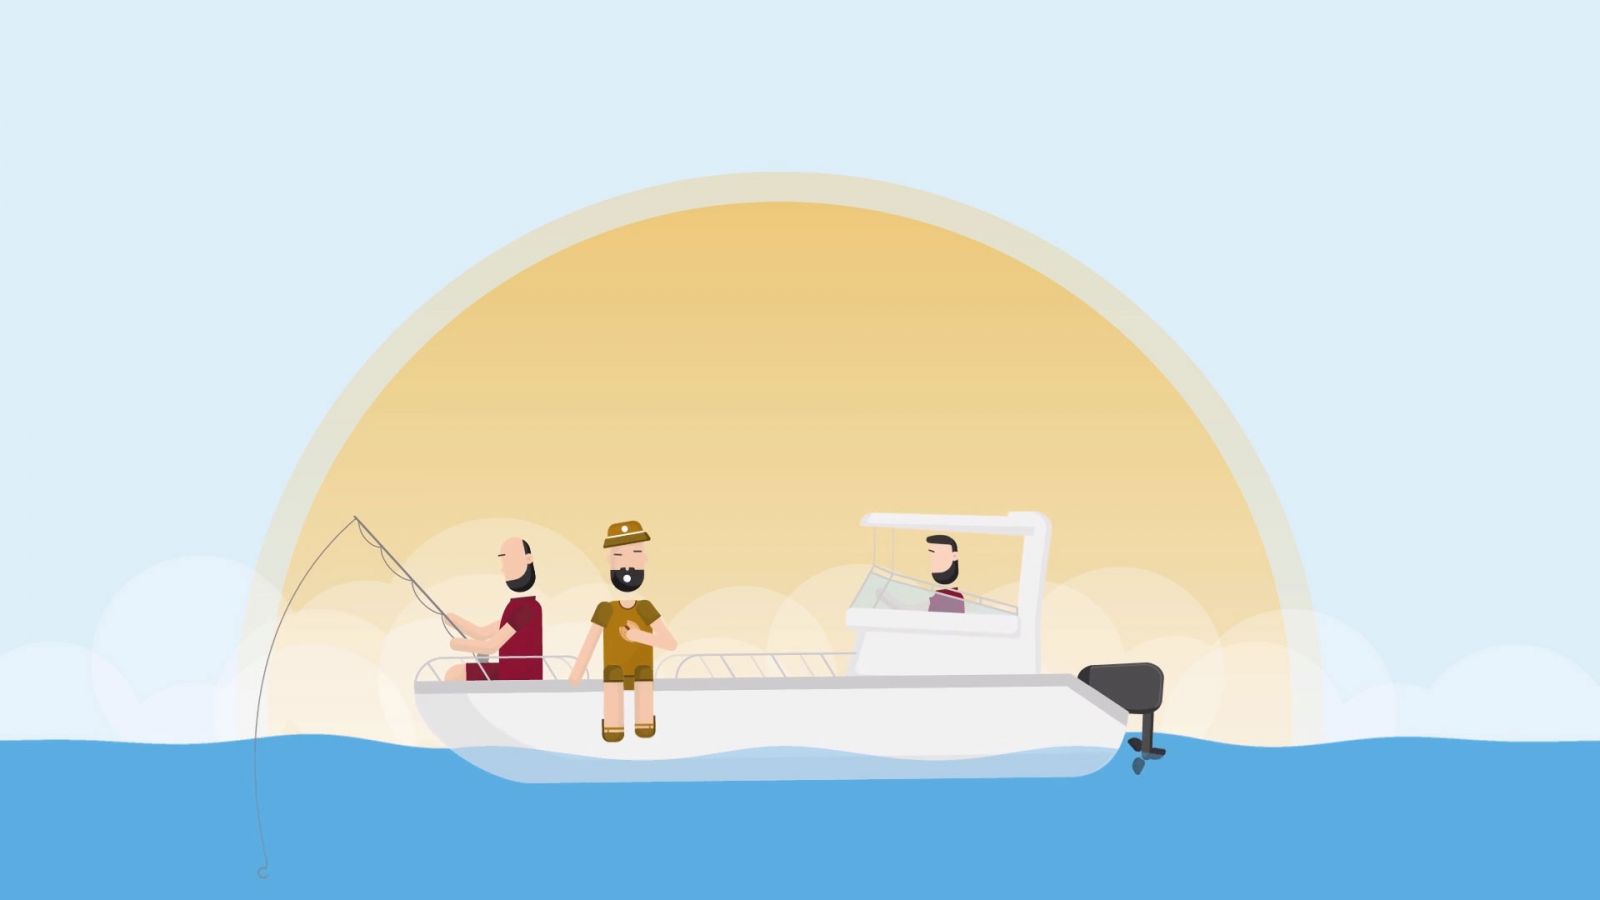 Qatar Charity Sea Campaign - Video Animation